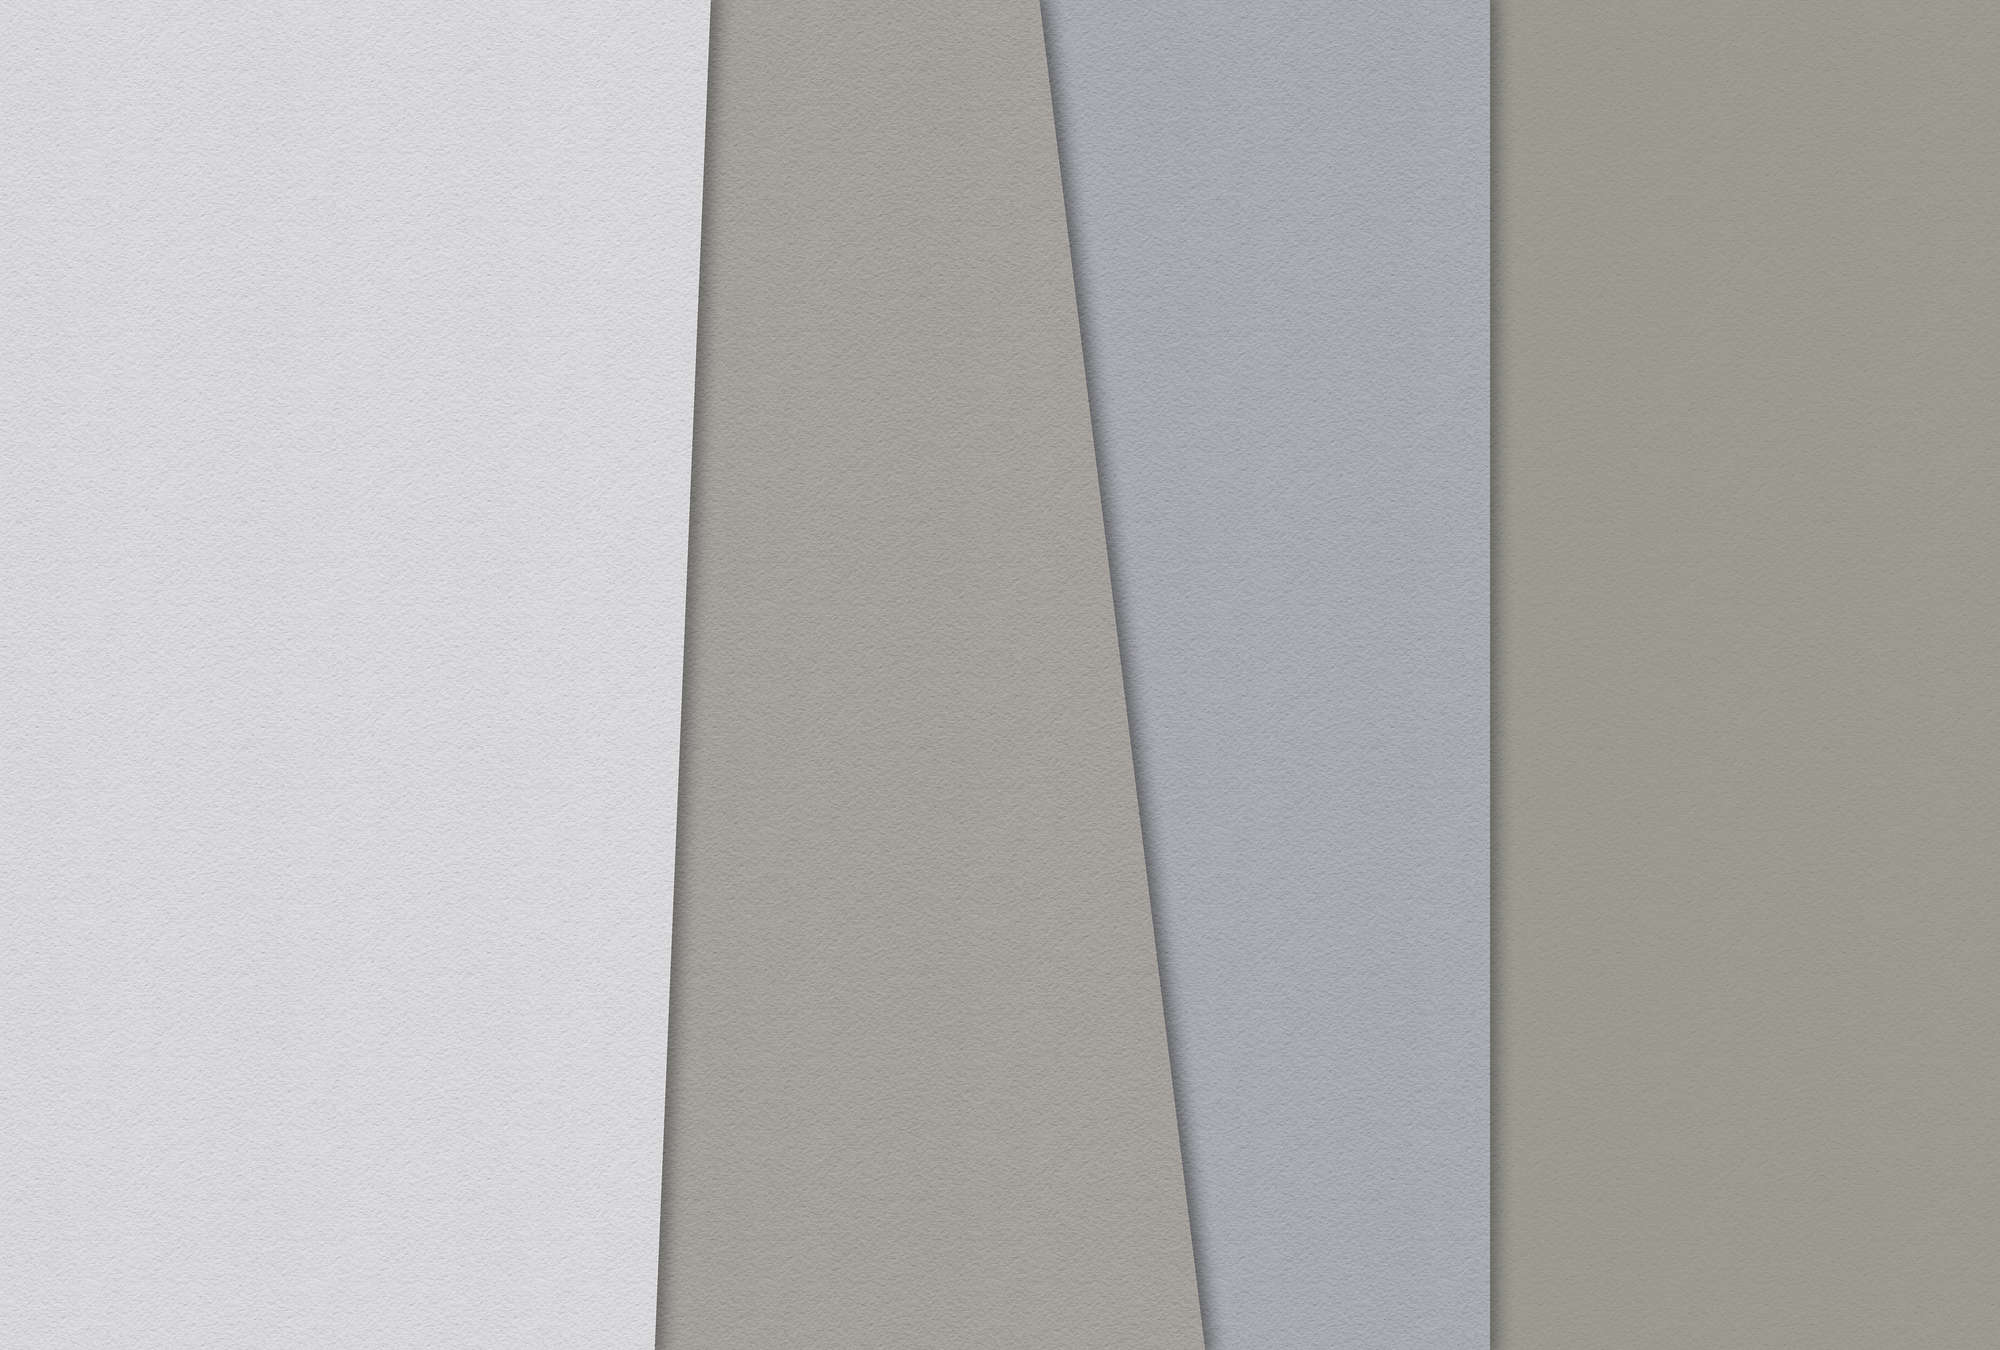             Papel estratificado 4 - Fotomural Minimalismo en estructura de papel hecho a mano - Azul, Crema | Perla vellón liso
        